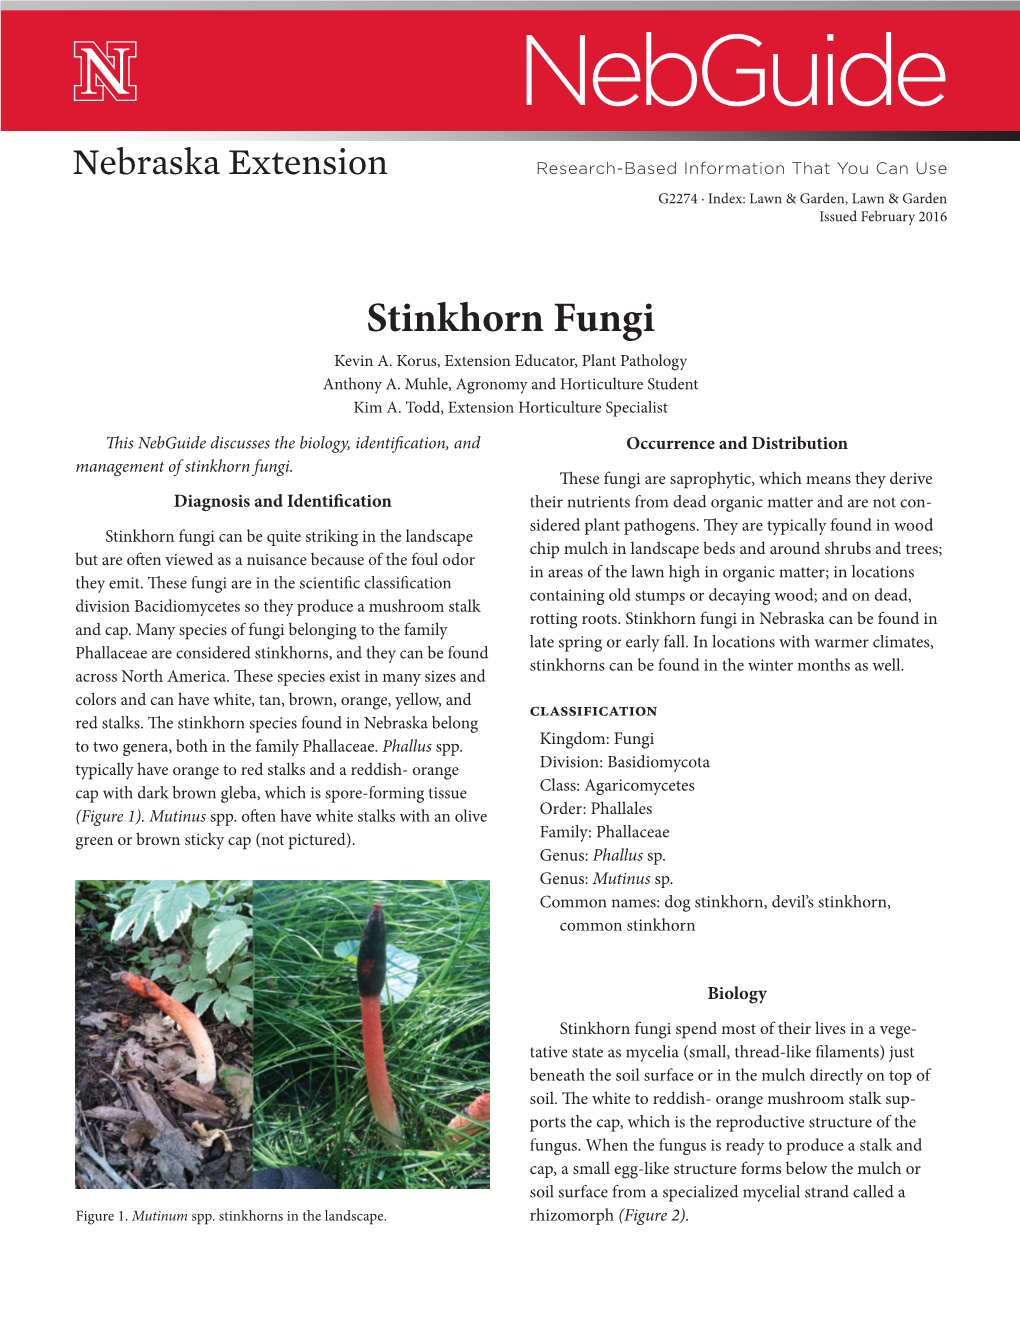 Stinkhorn Fungi Kevin A